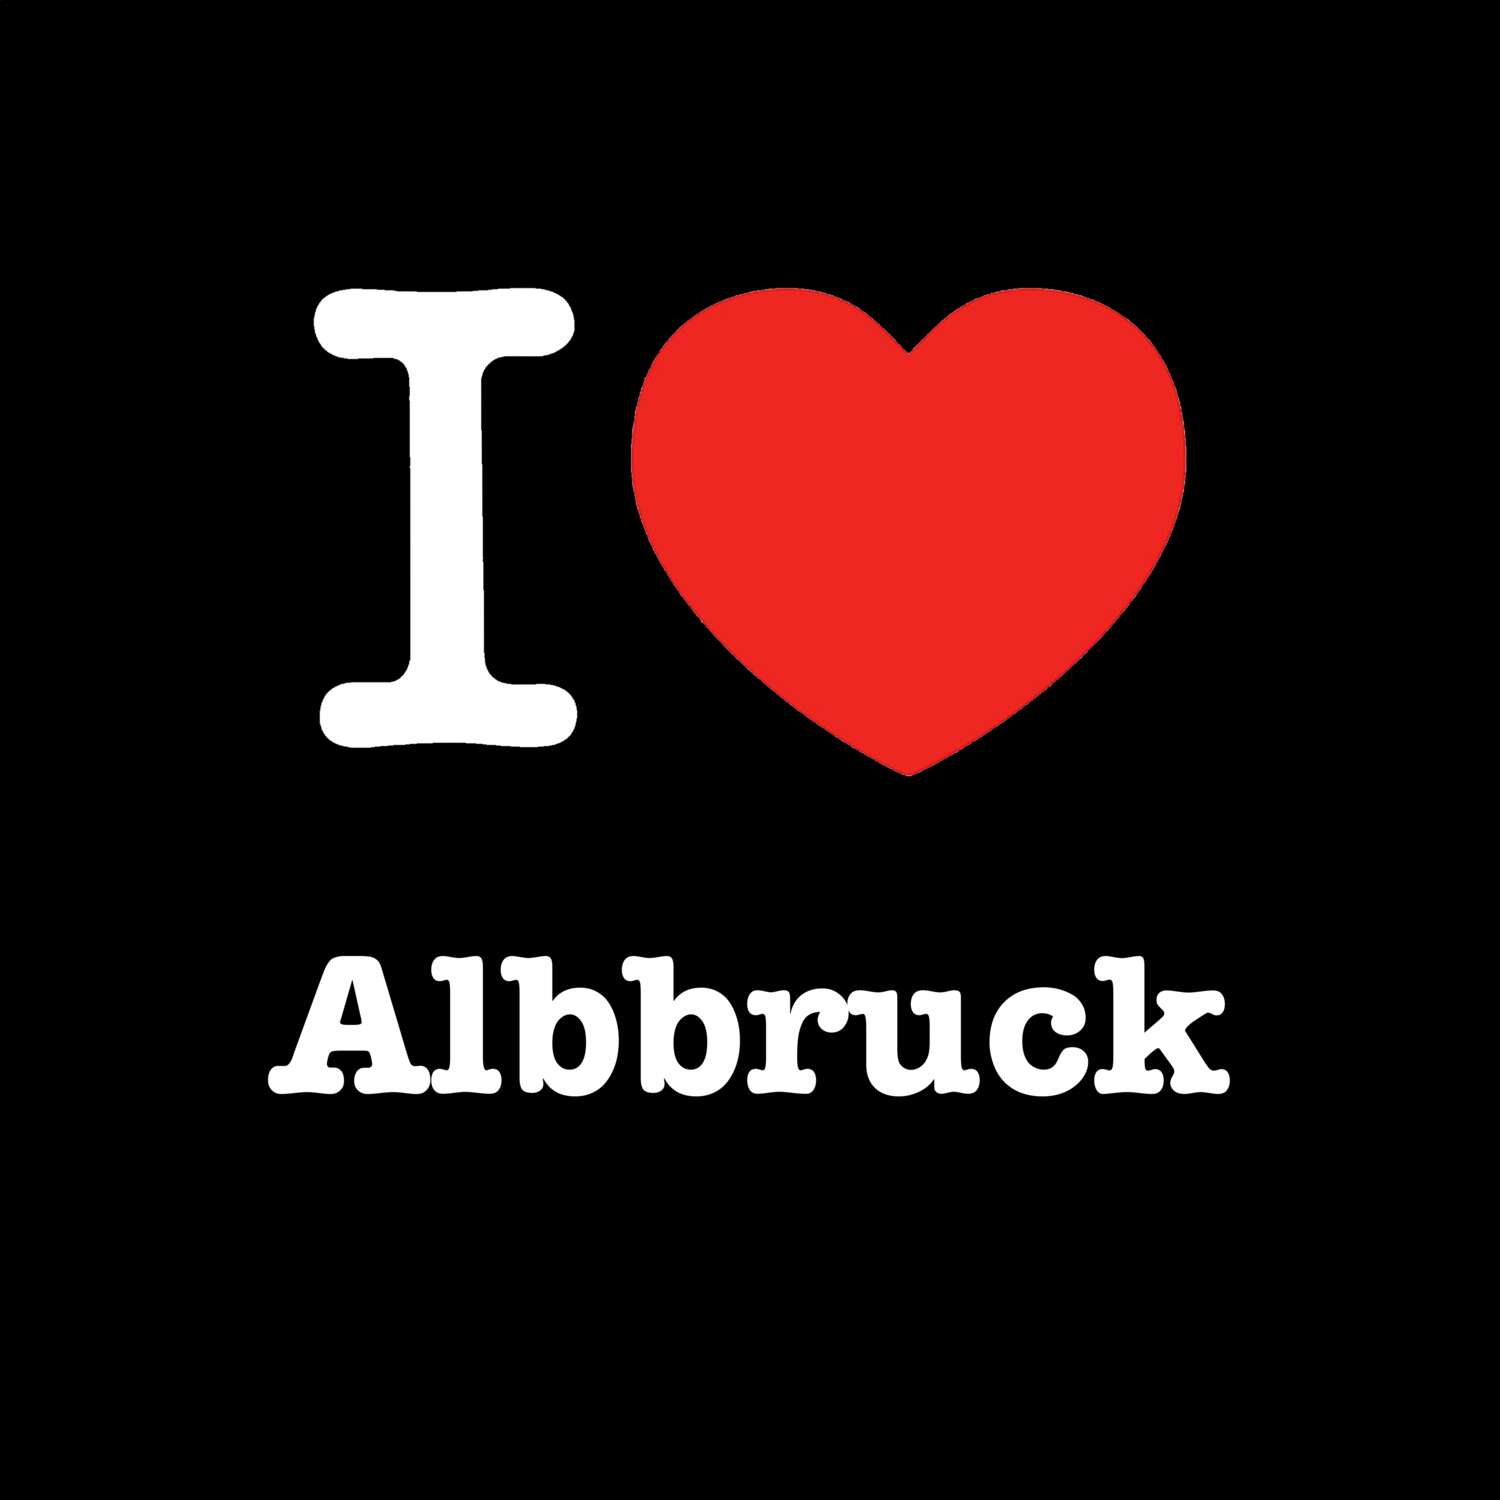 Albbruck T-Shirt »I love«